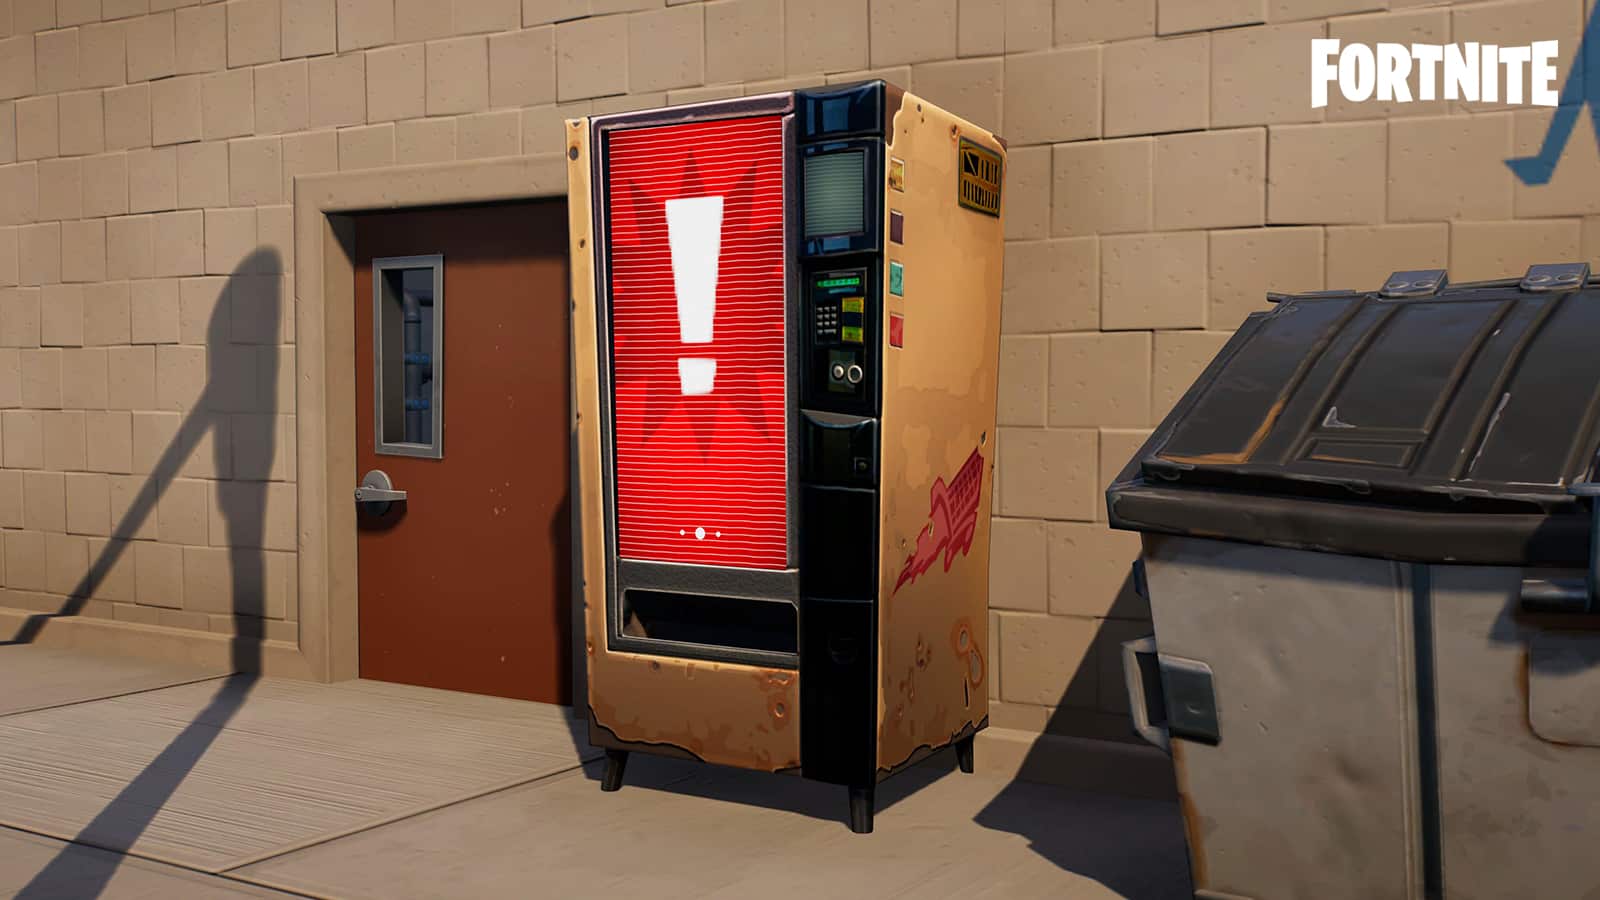 A Malfunctioning Vending Machine in Fortnite